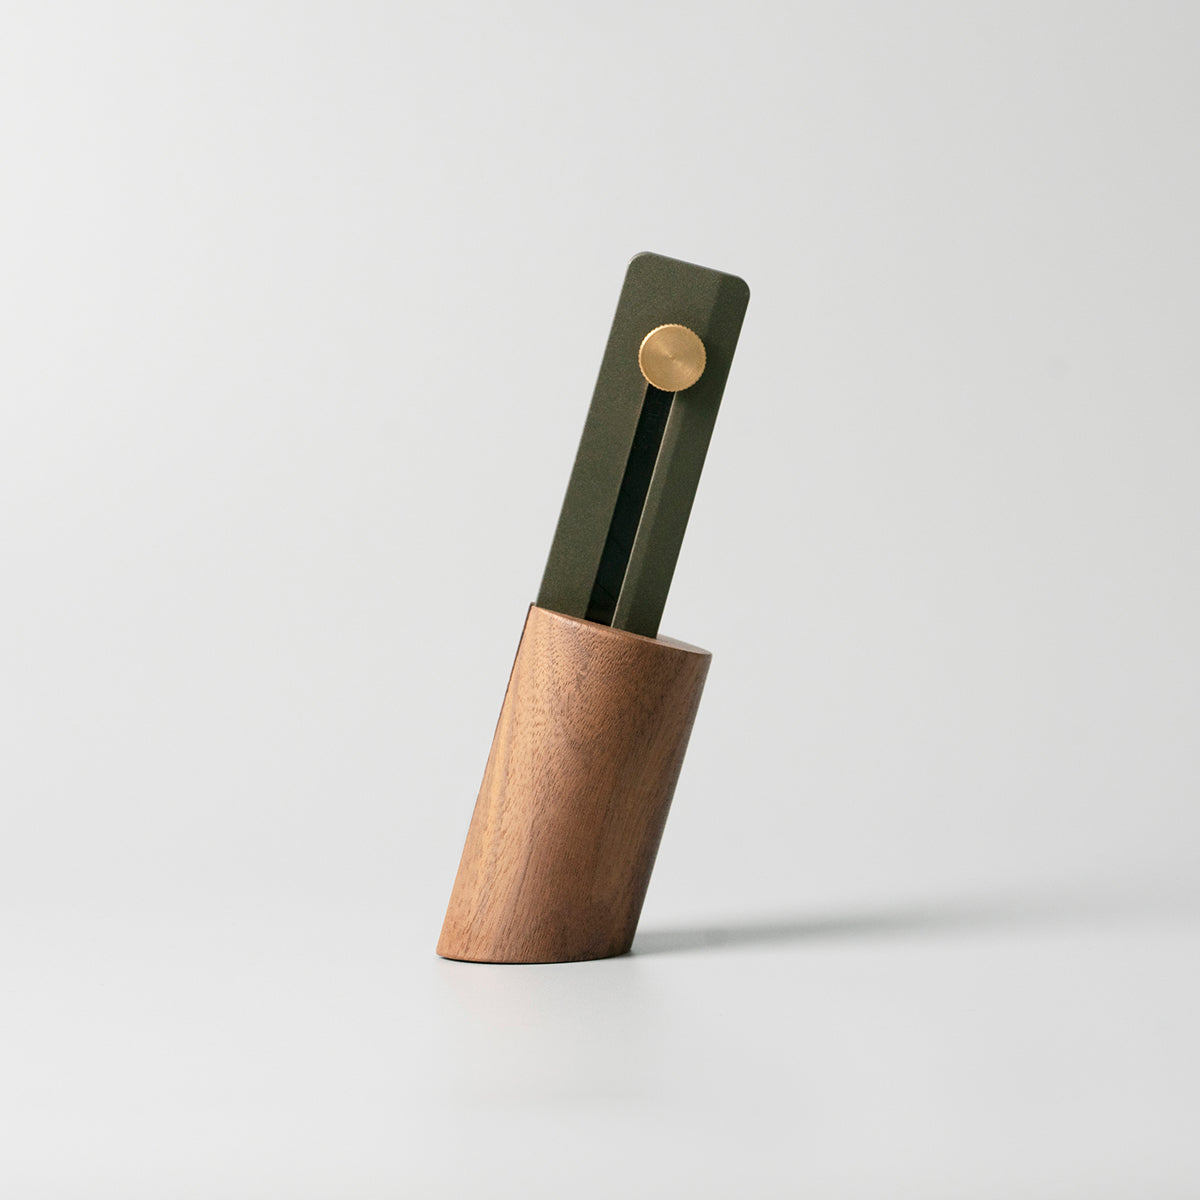 walnut wood holder, utility knife stand, wooden holder